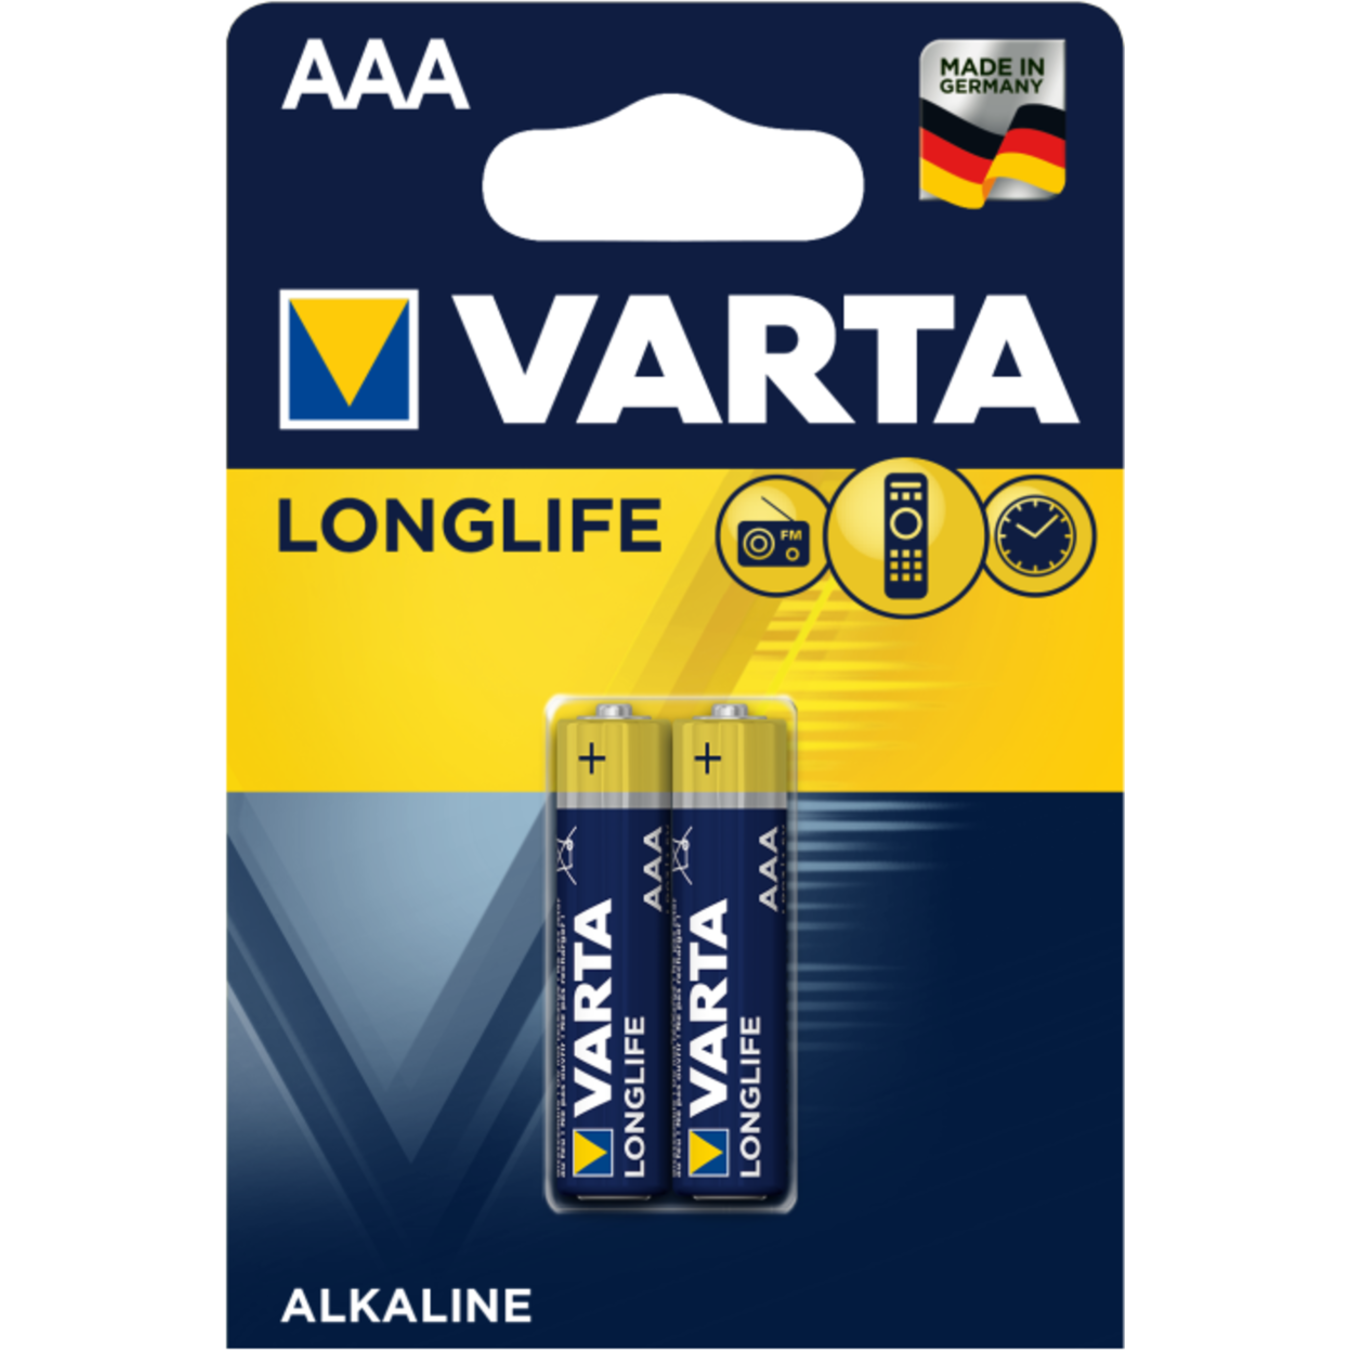 Varta Longlife AAA BLI 2 battery 2